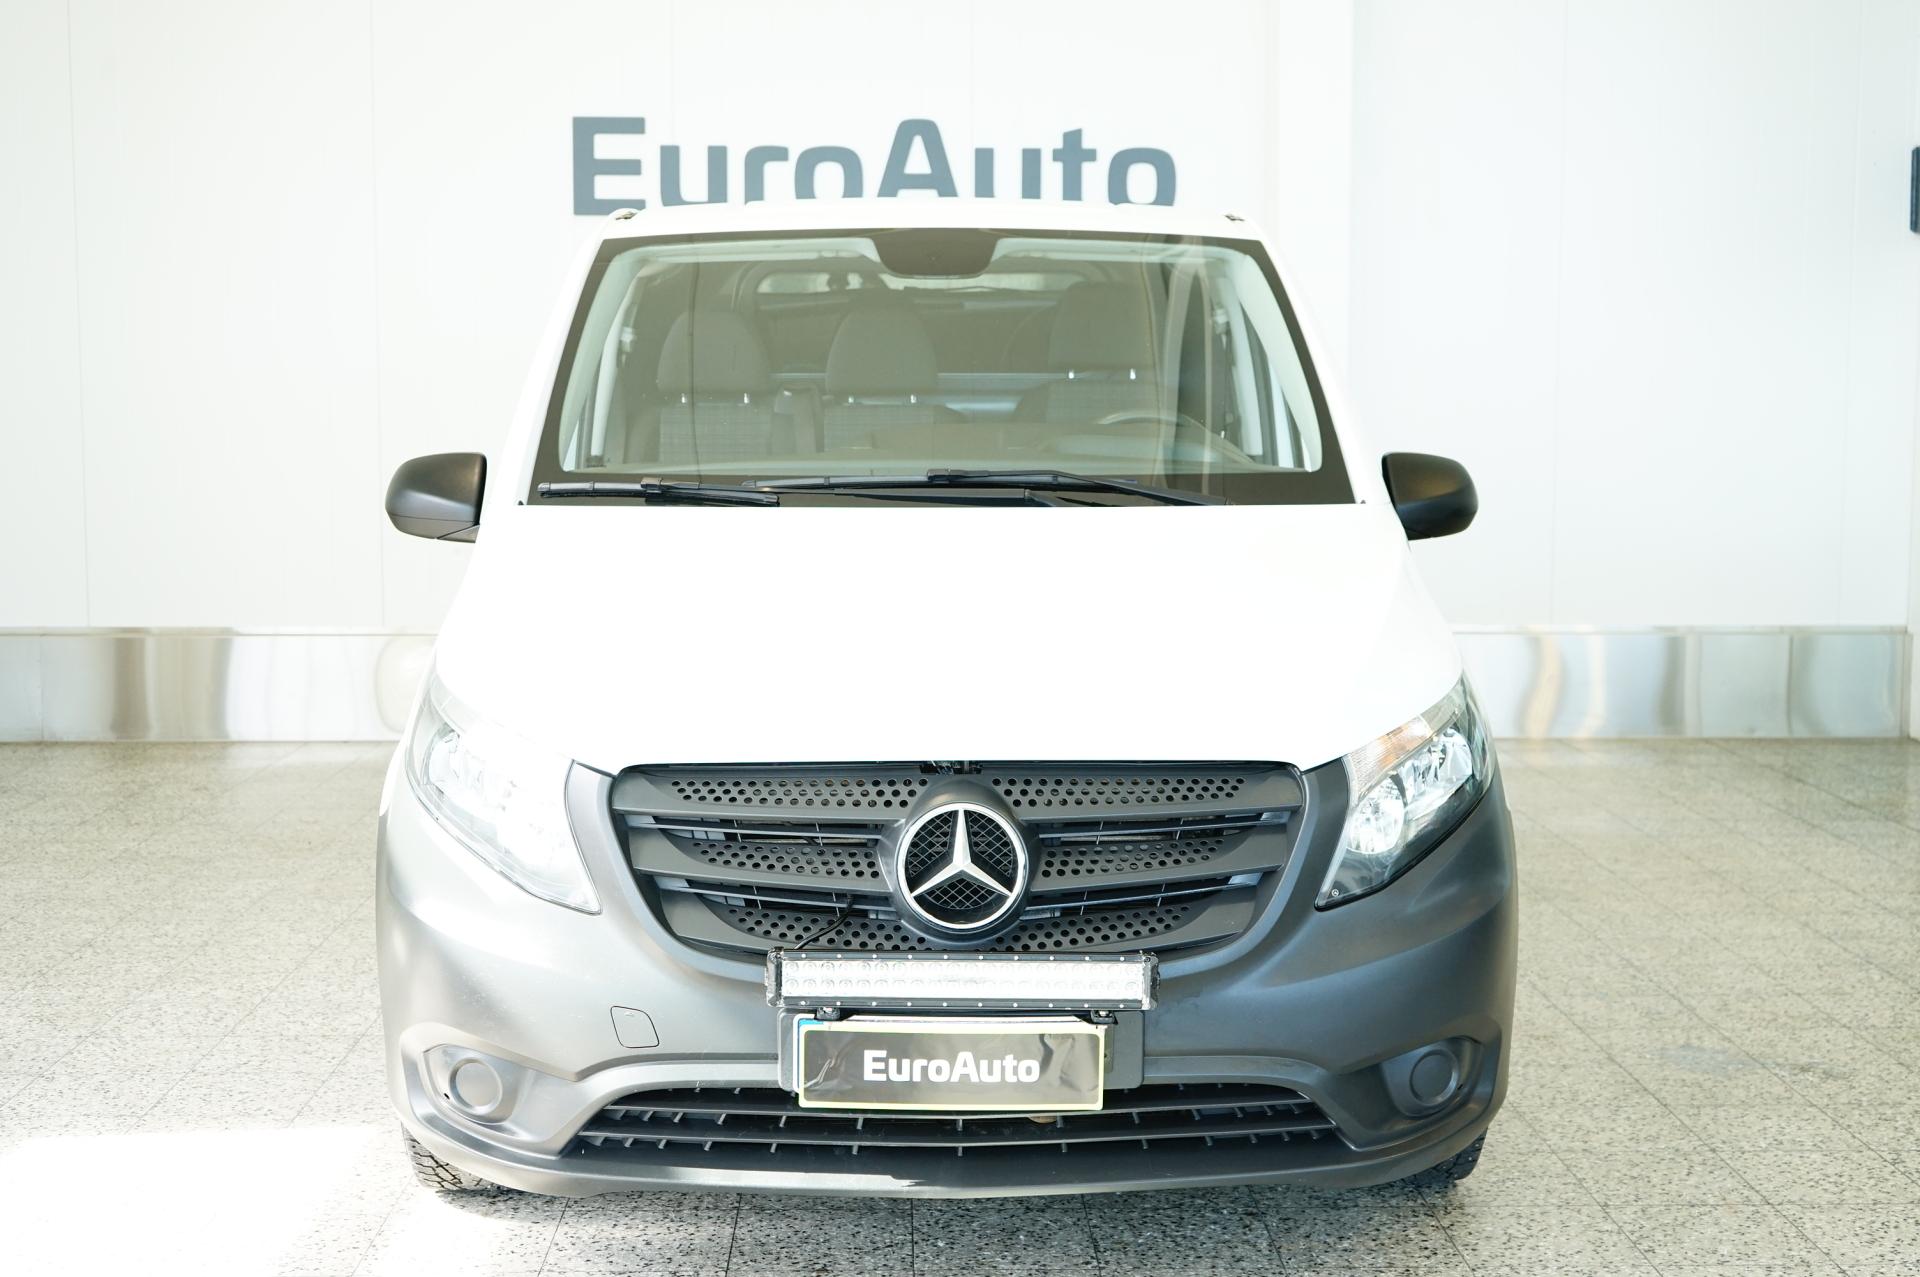 Mercedes-Benz Vito - EuroAuto